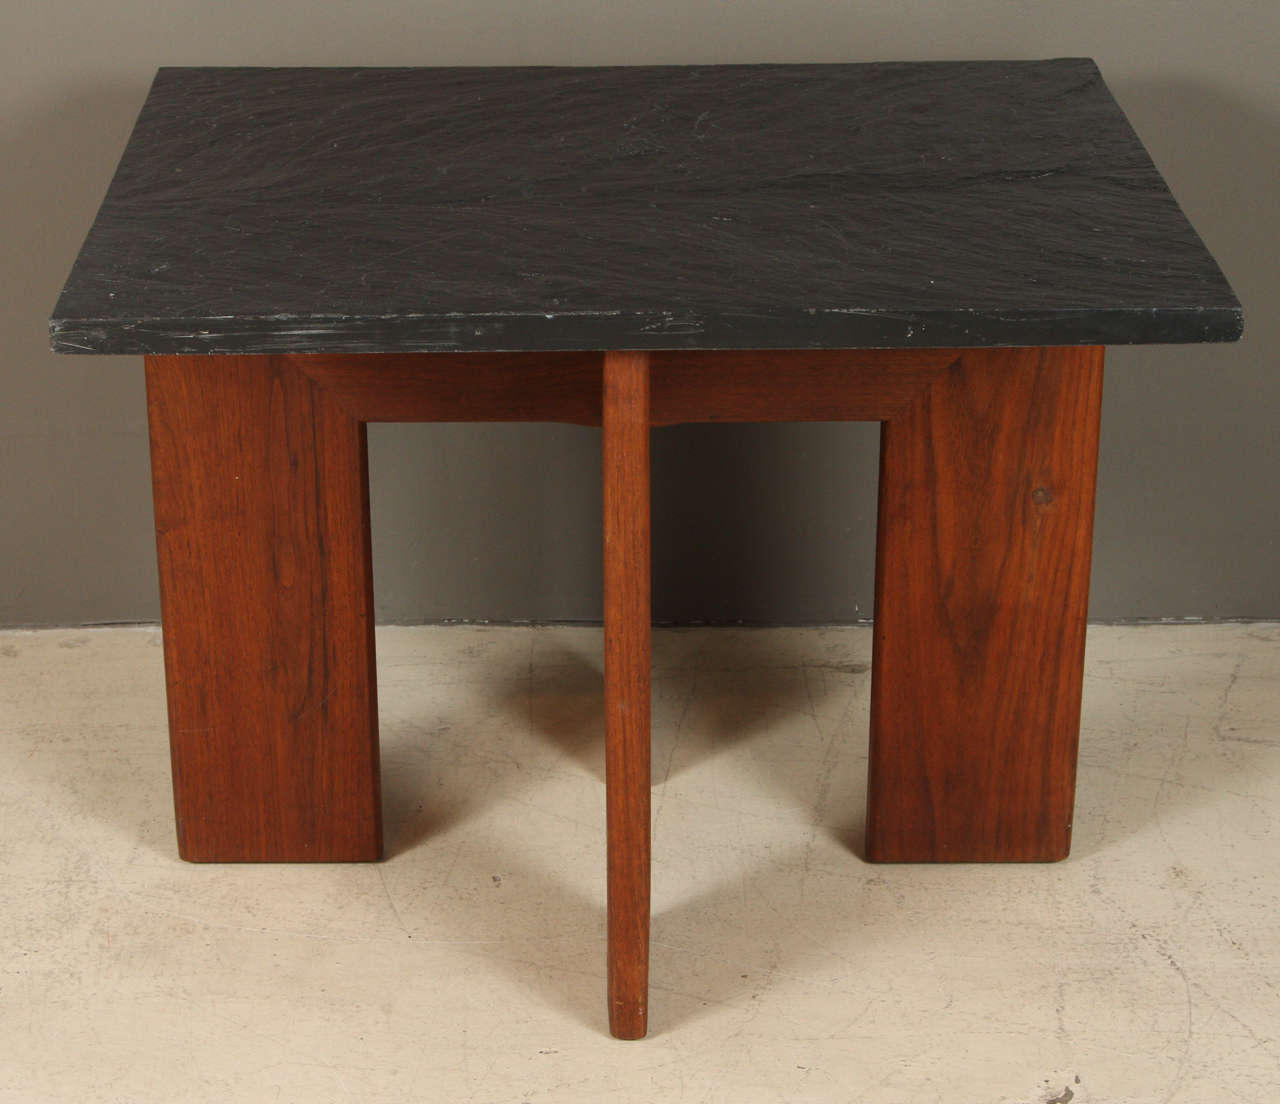 Walnut and slate custom side table by Phillip Lloyd Powell.